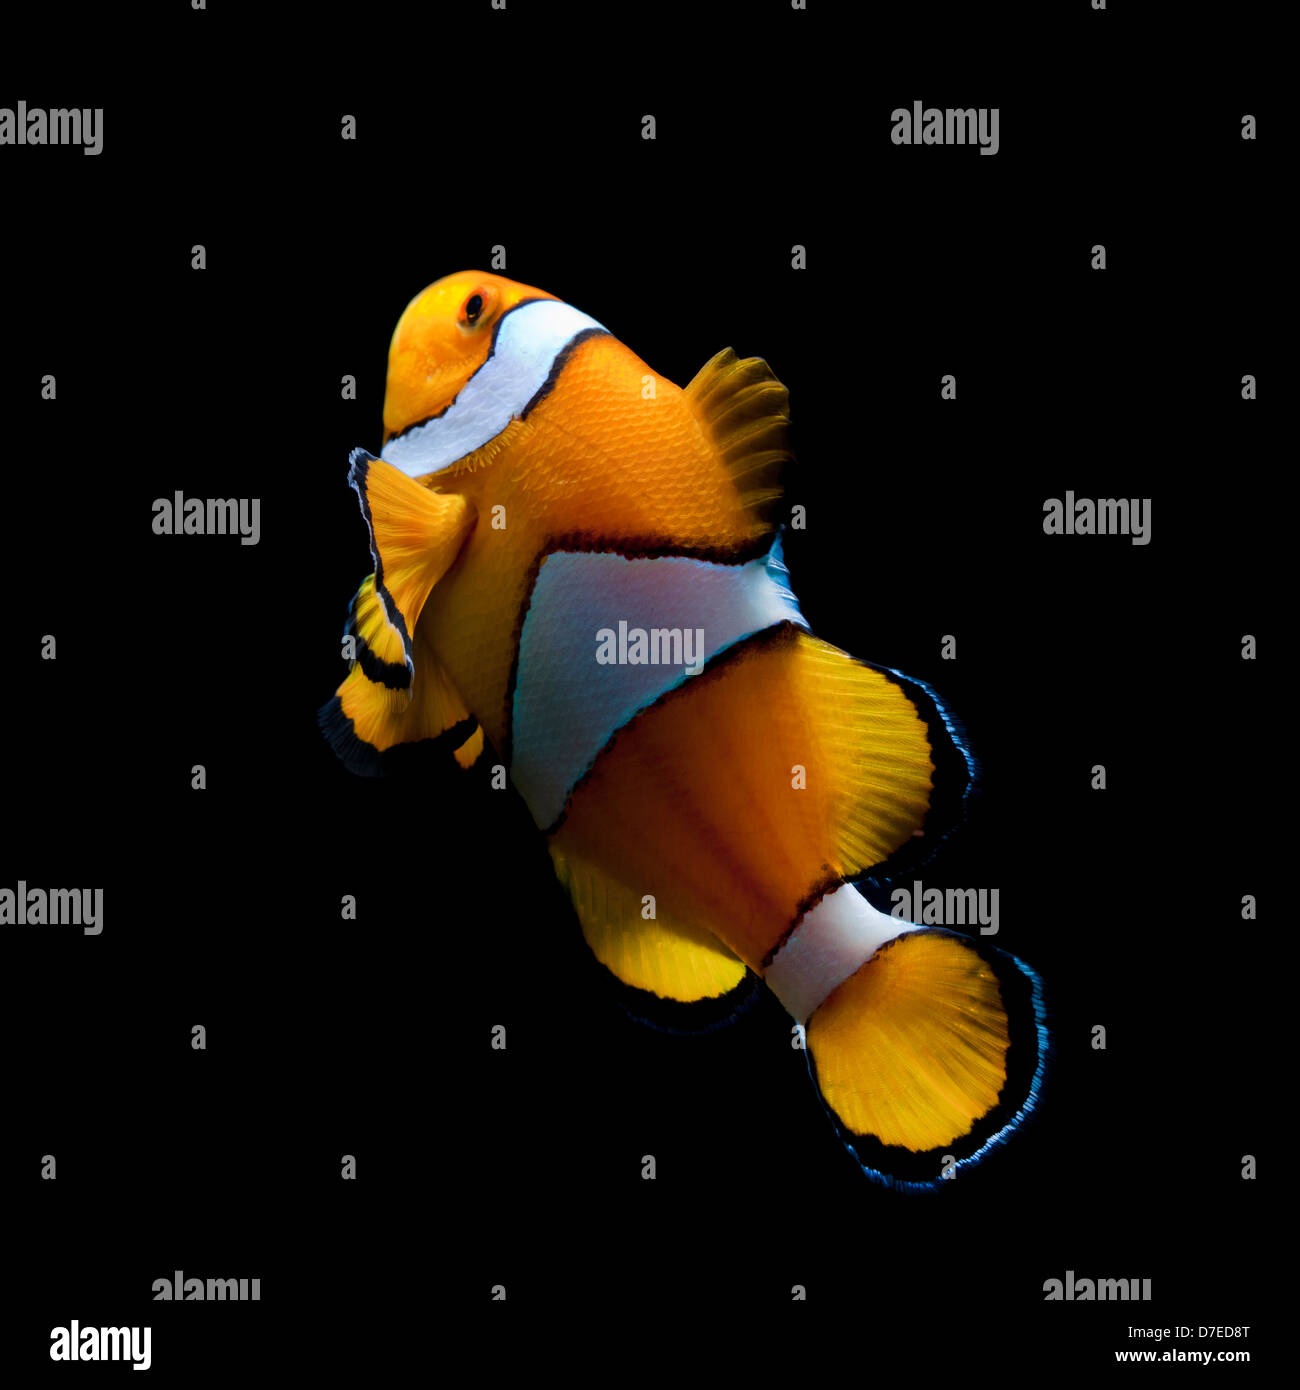 Clown fish on black background Stock Photo